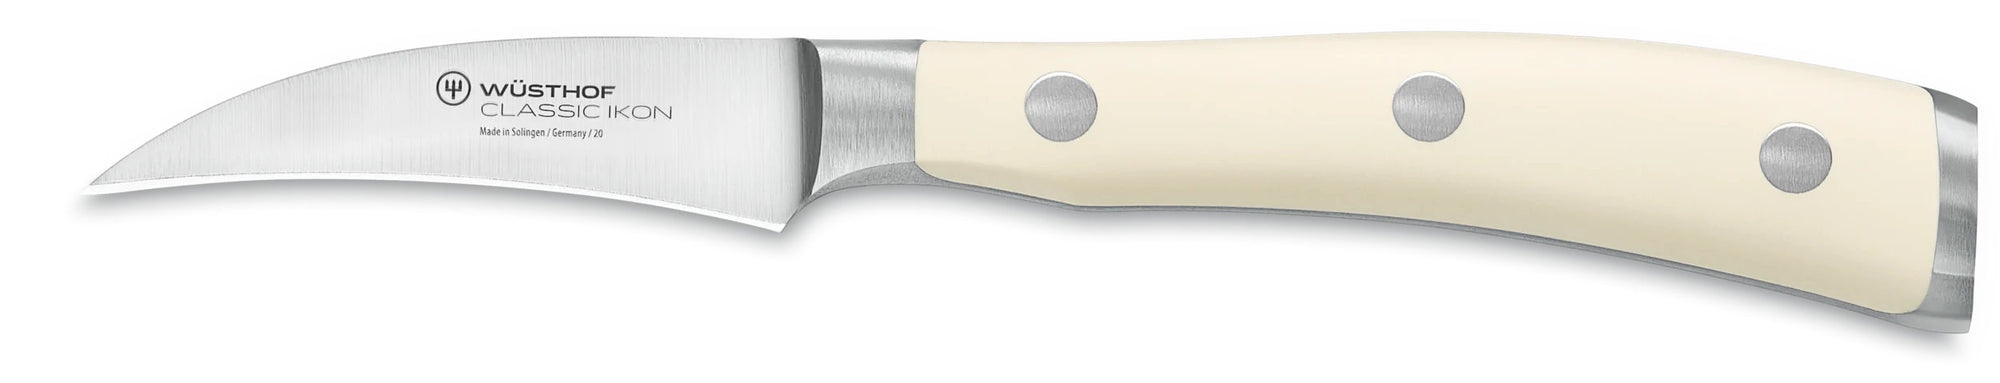 Wusthof Classic IKON Peeling Knife, Creme, 2.75-inch (7 cm) - 4020-6